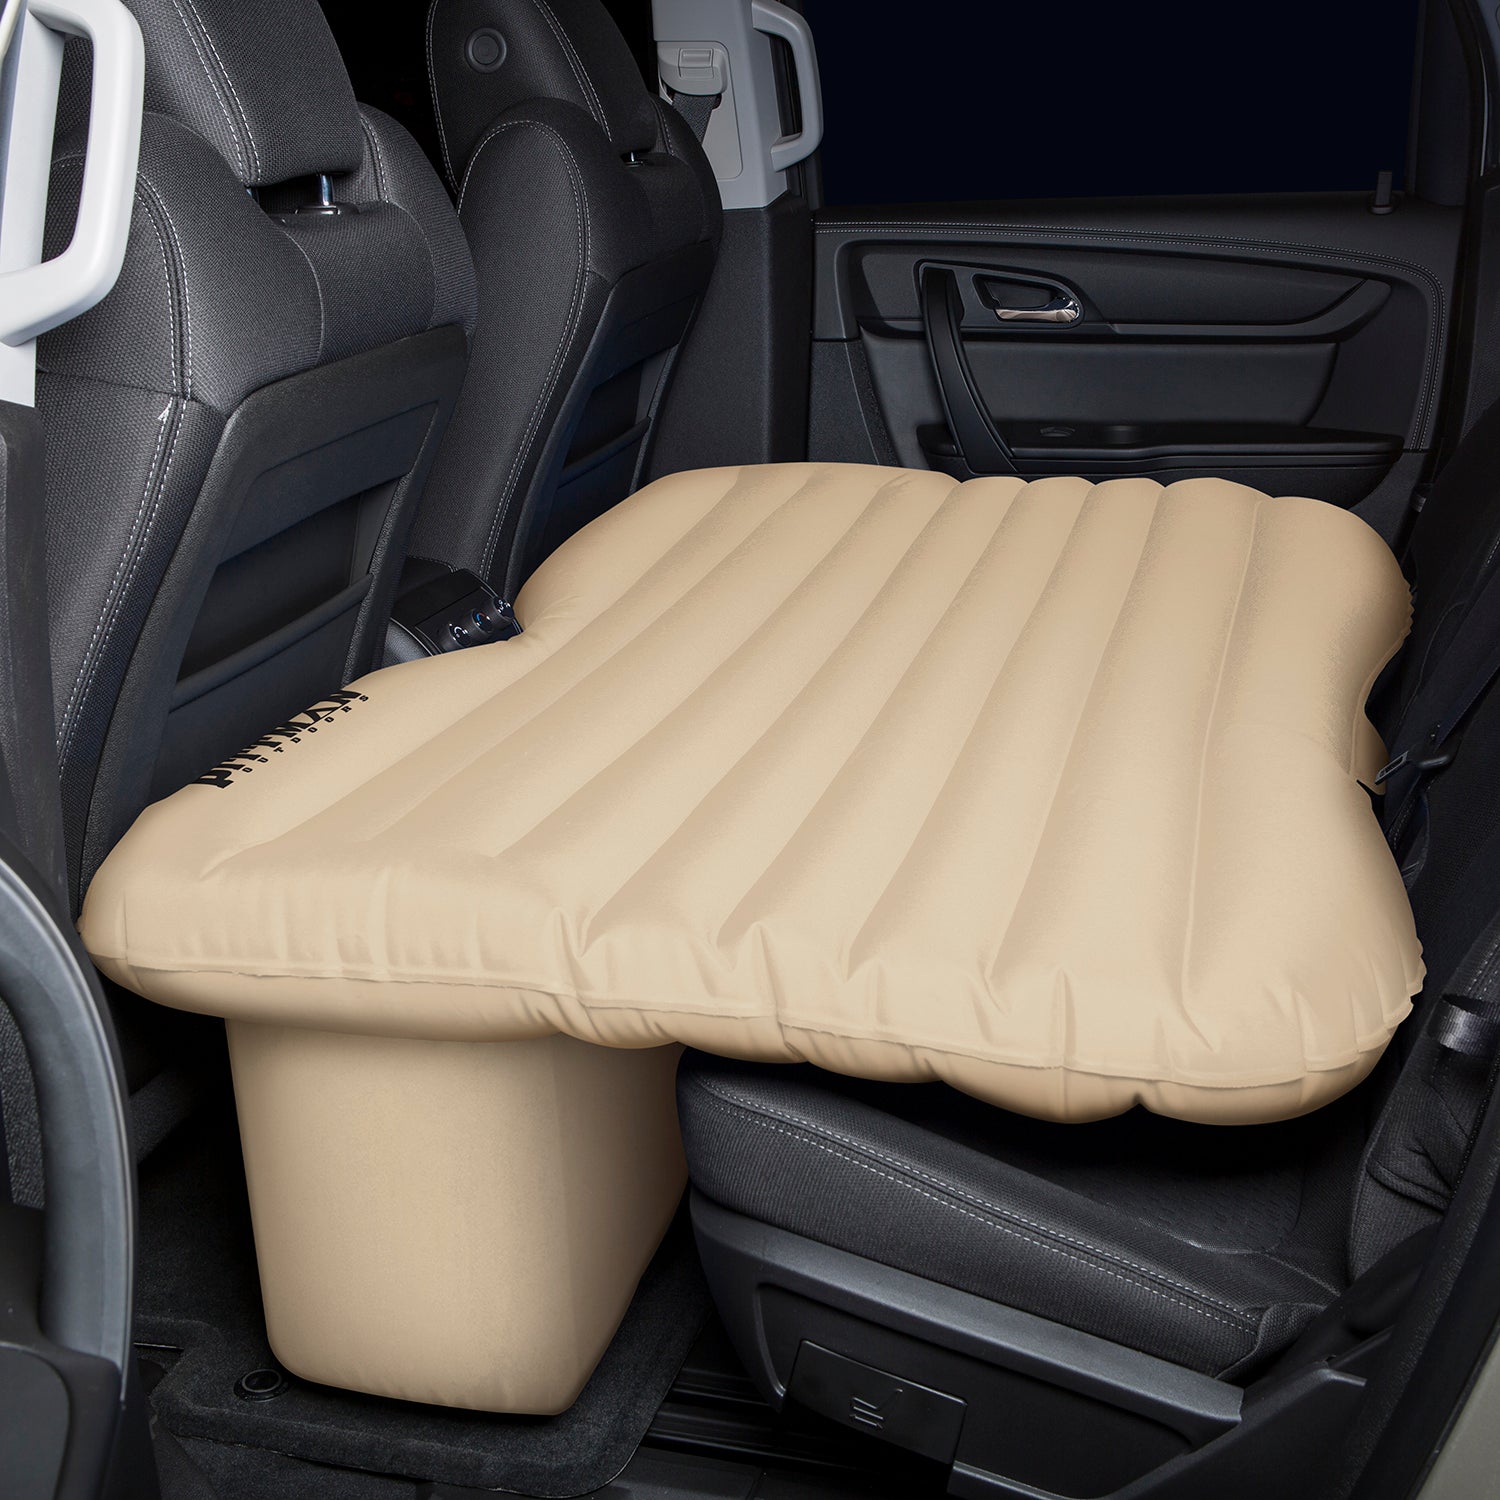 Pittman Outdoors PPI-TAN_TRKMAT Inflatable Rear Seat Air Mattress Full-Size. Fits SUV ft. s &amp; Full-size Trucks